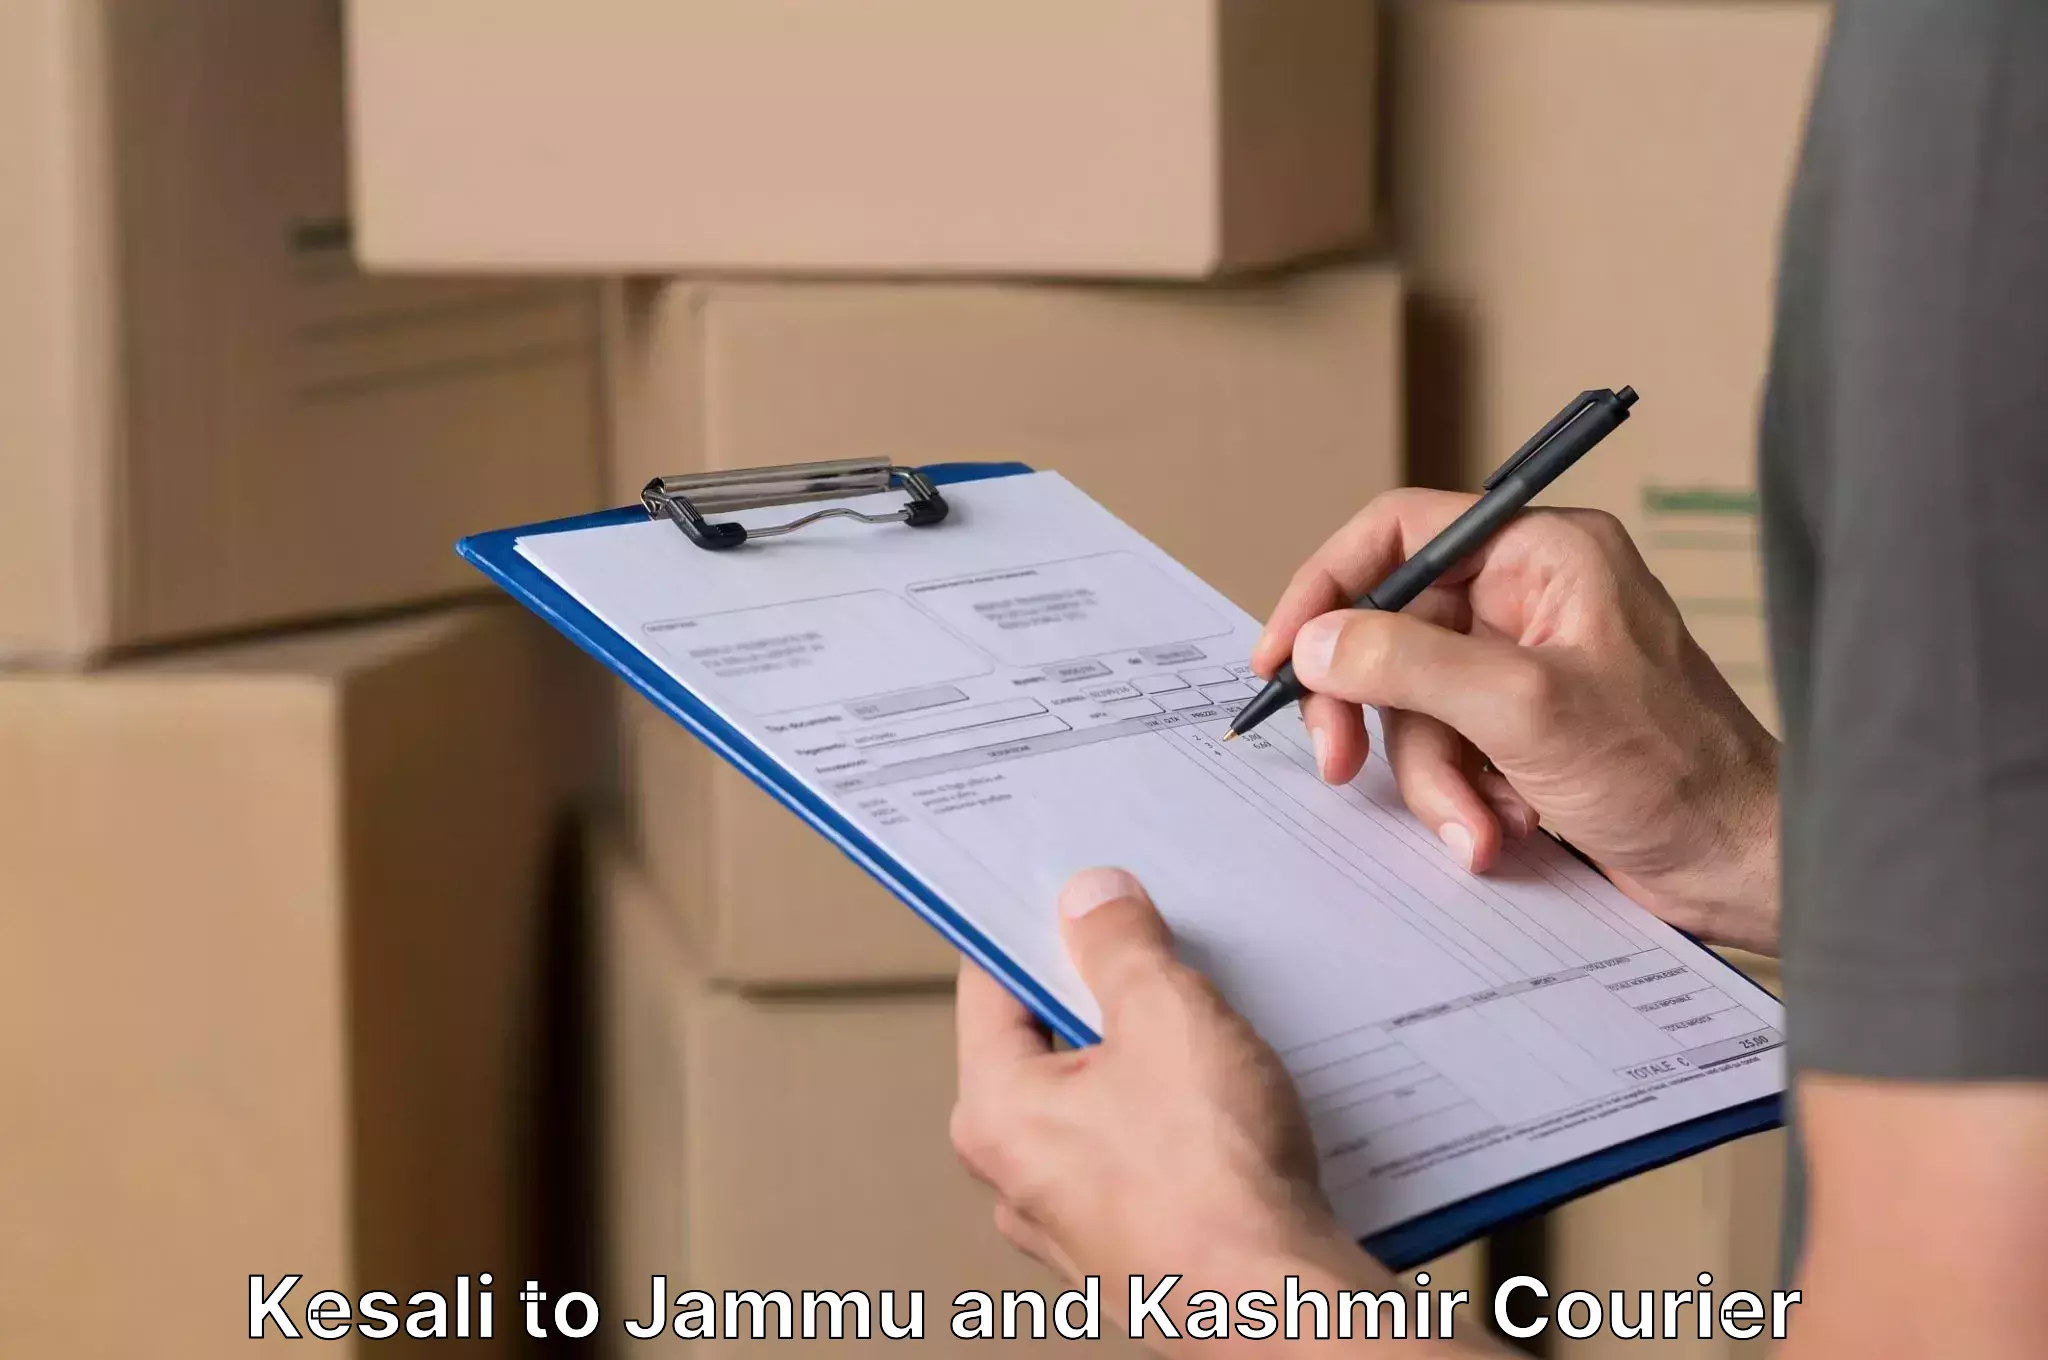 Professional furniture movers Kesali to Kargil